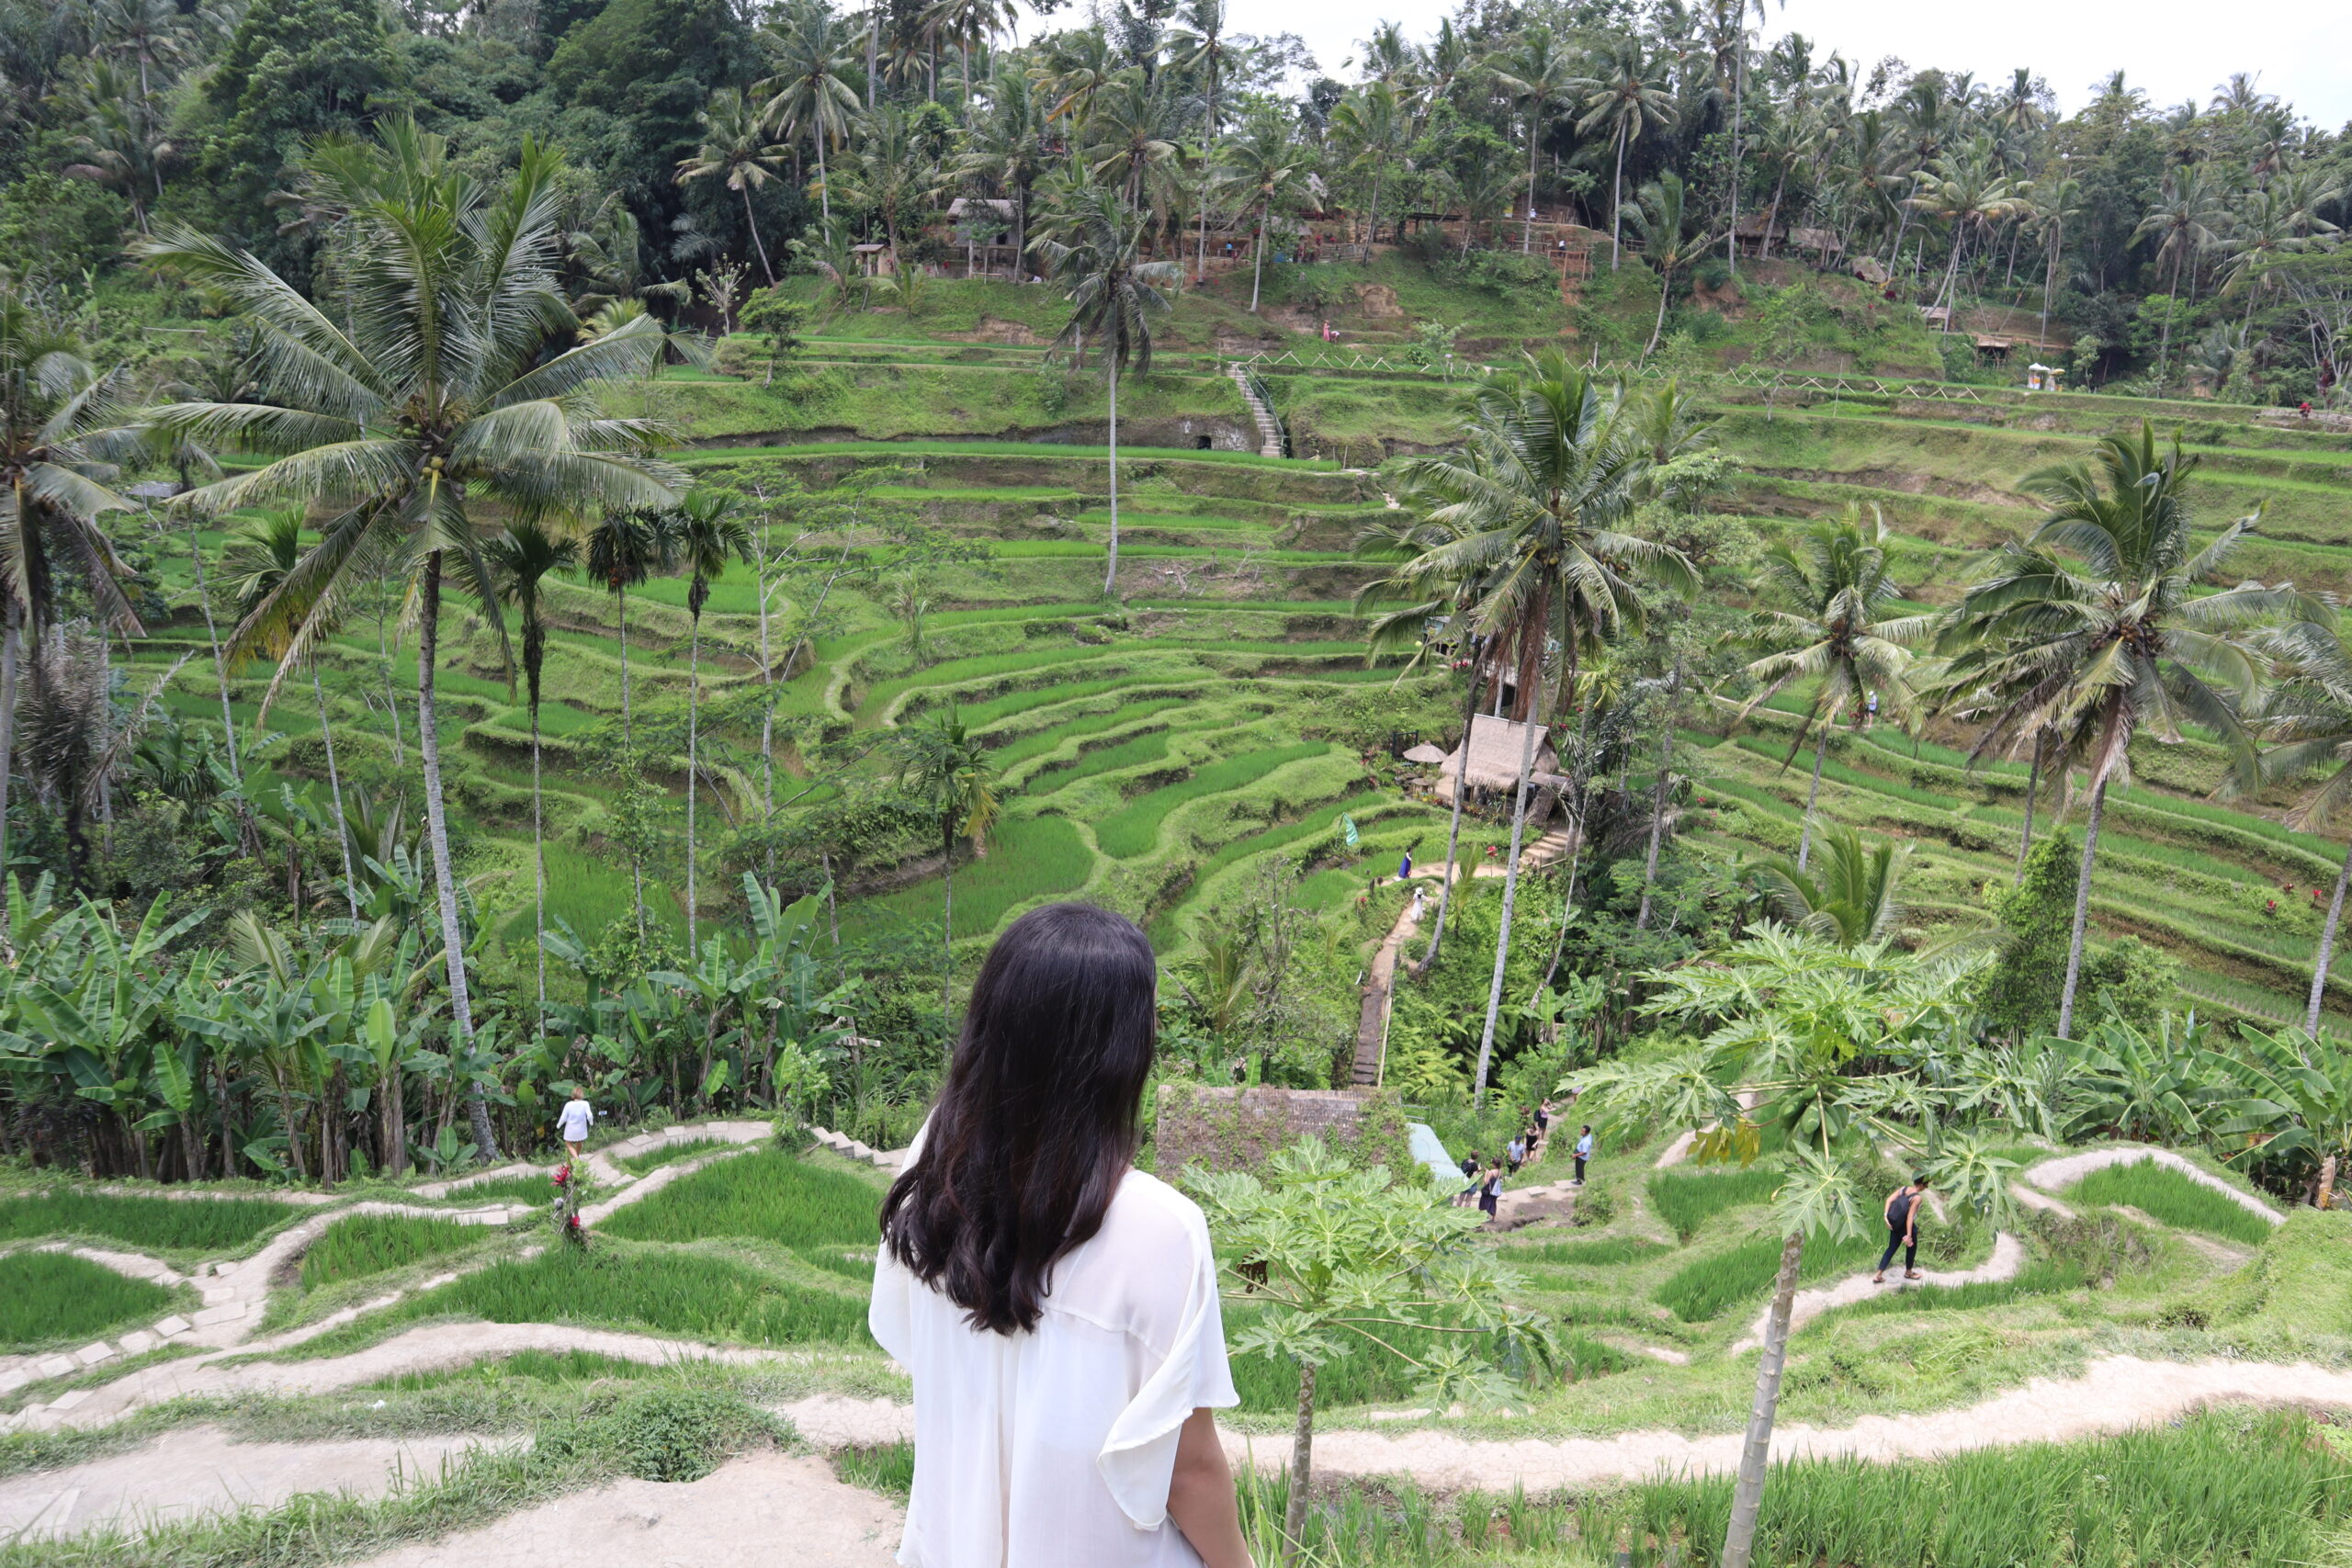 Visiting The Tegallalang Rice Terraces in Bali